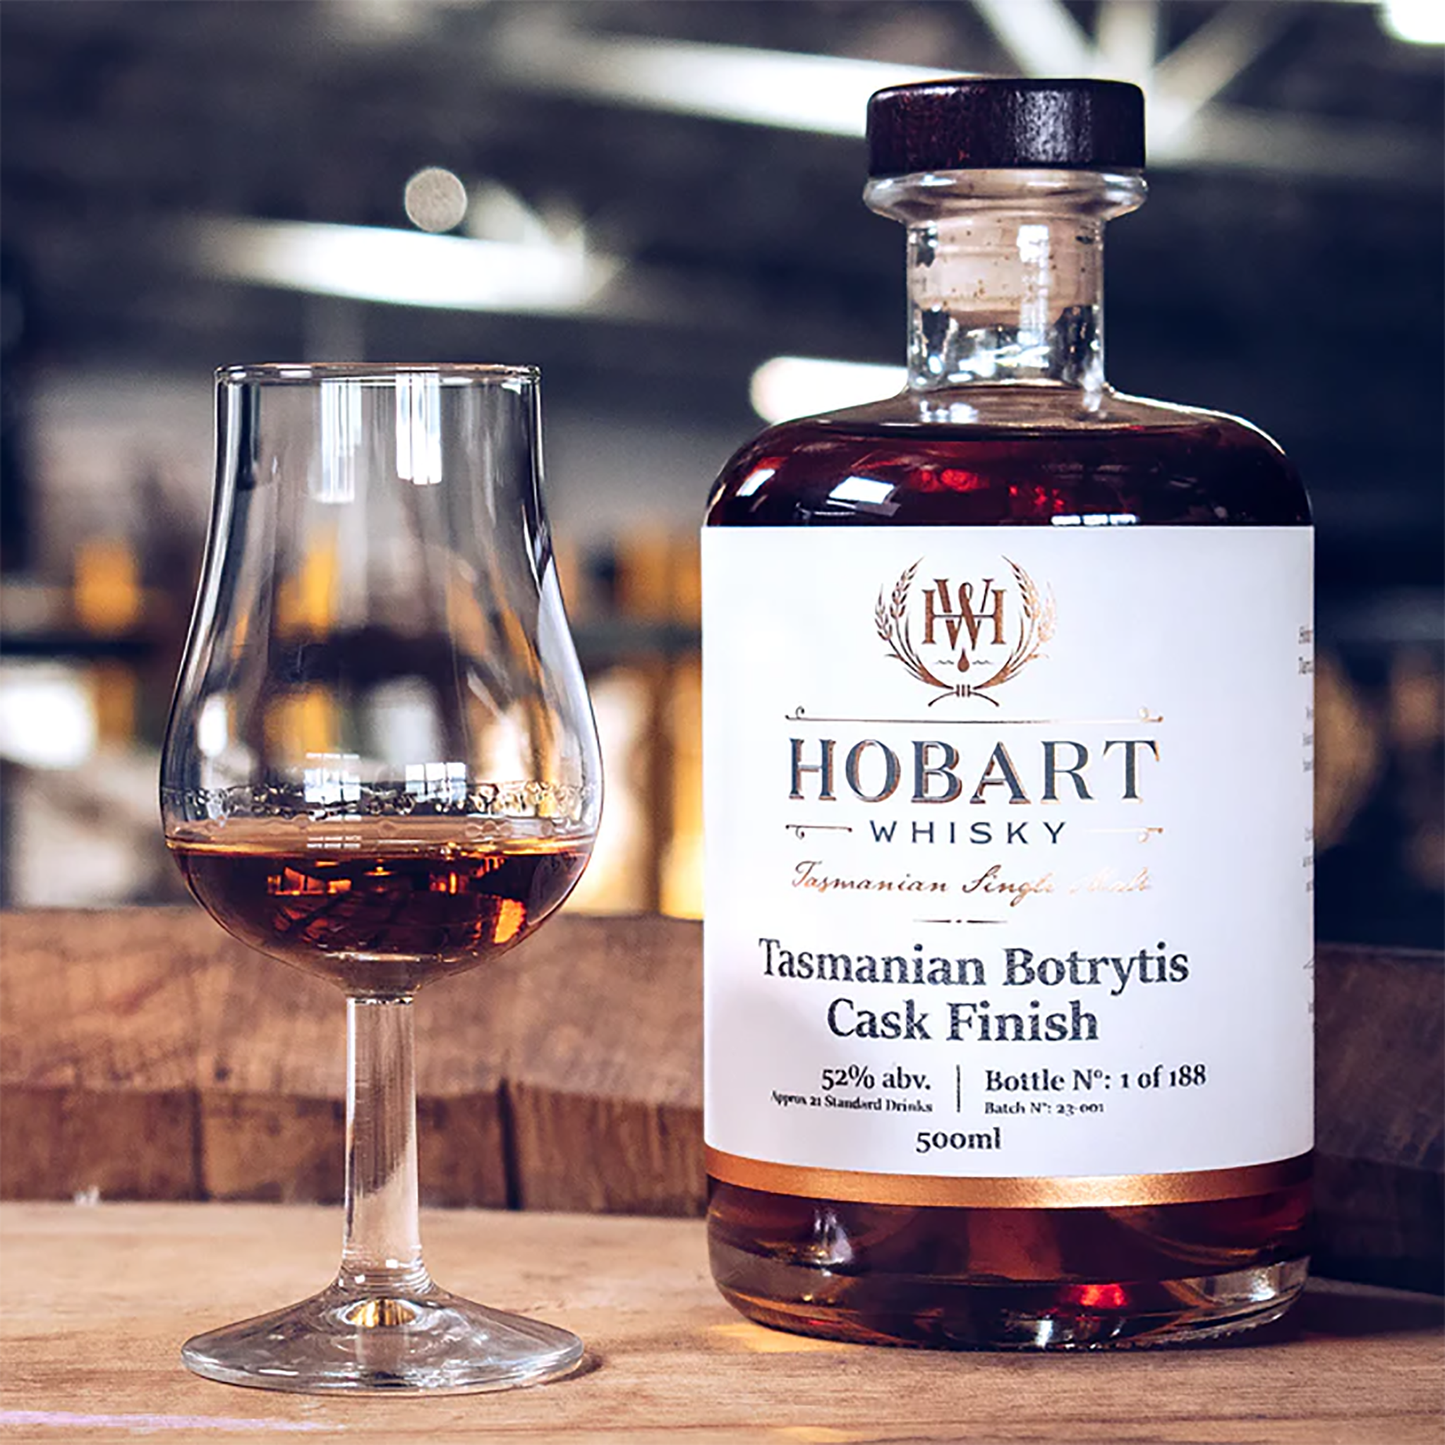 Hobart Whisky Tasmanian Botrytis Cask Finish Single Malt Whisky 500ml (Batch 23-001)